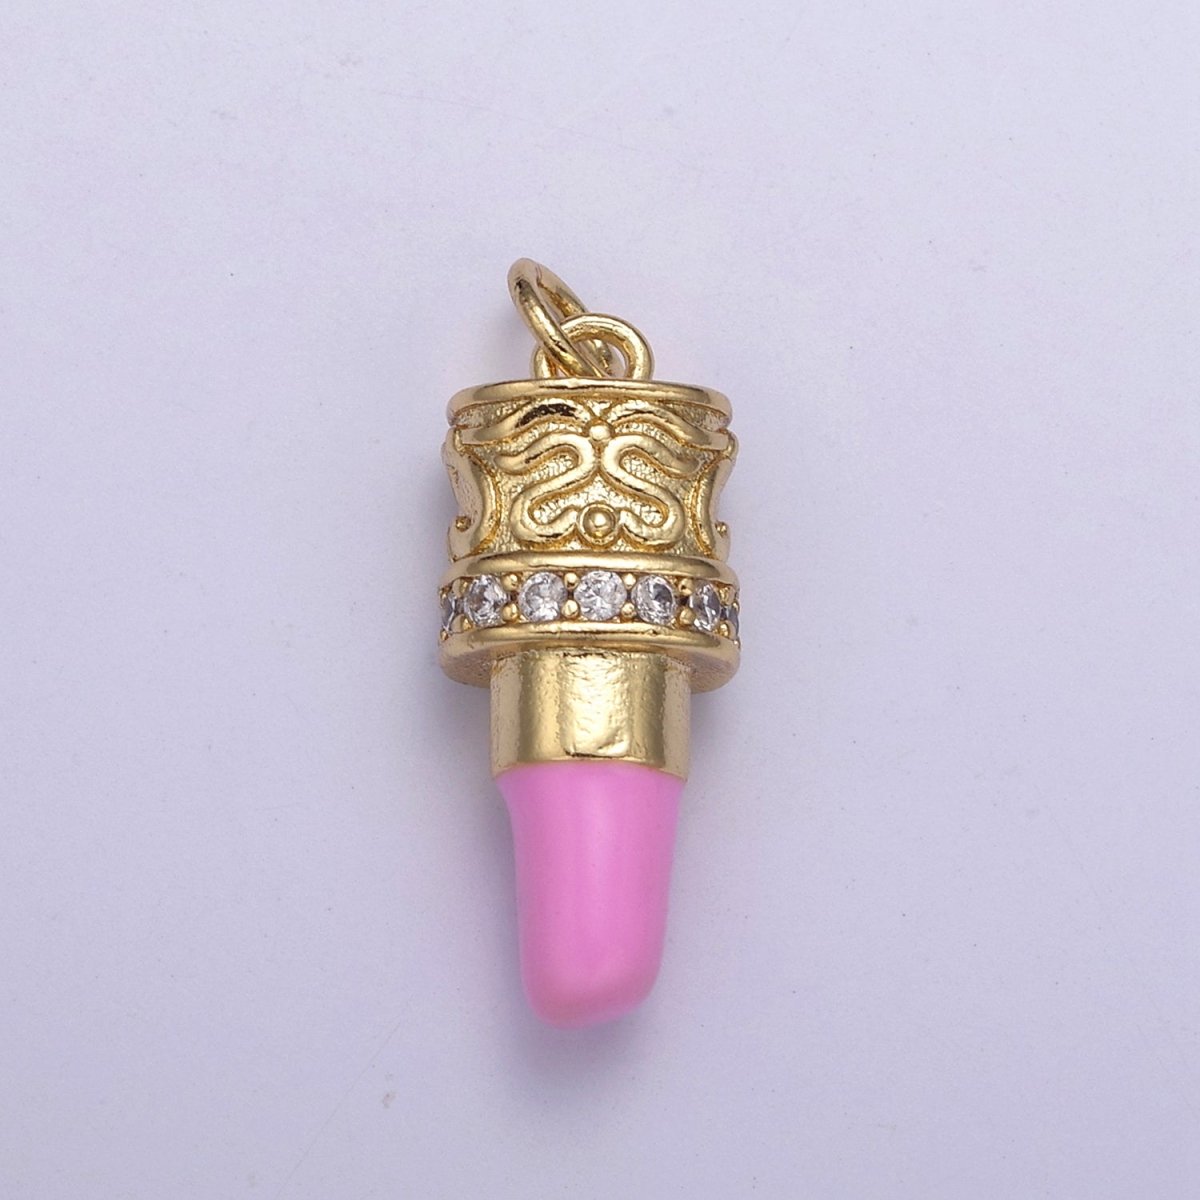 CZ Pave Pink Lipstick Charm, Lipstick Charm, Make-up Charm, Bracelet Charm, Necklace Charm,25X8.8mm, Jewelry Making Charm N-258 - N-260 - DLUXCA